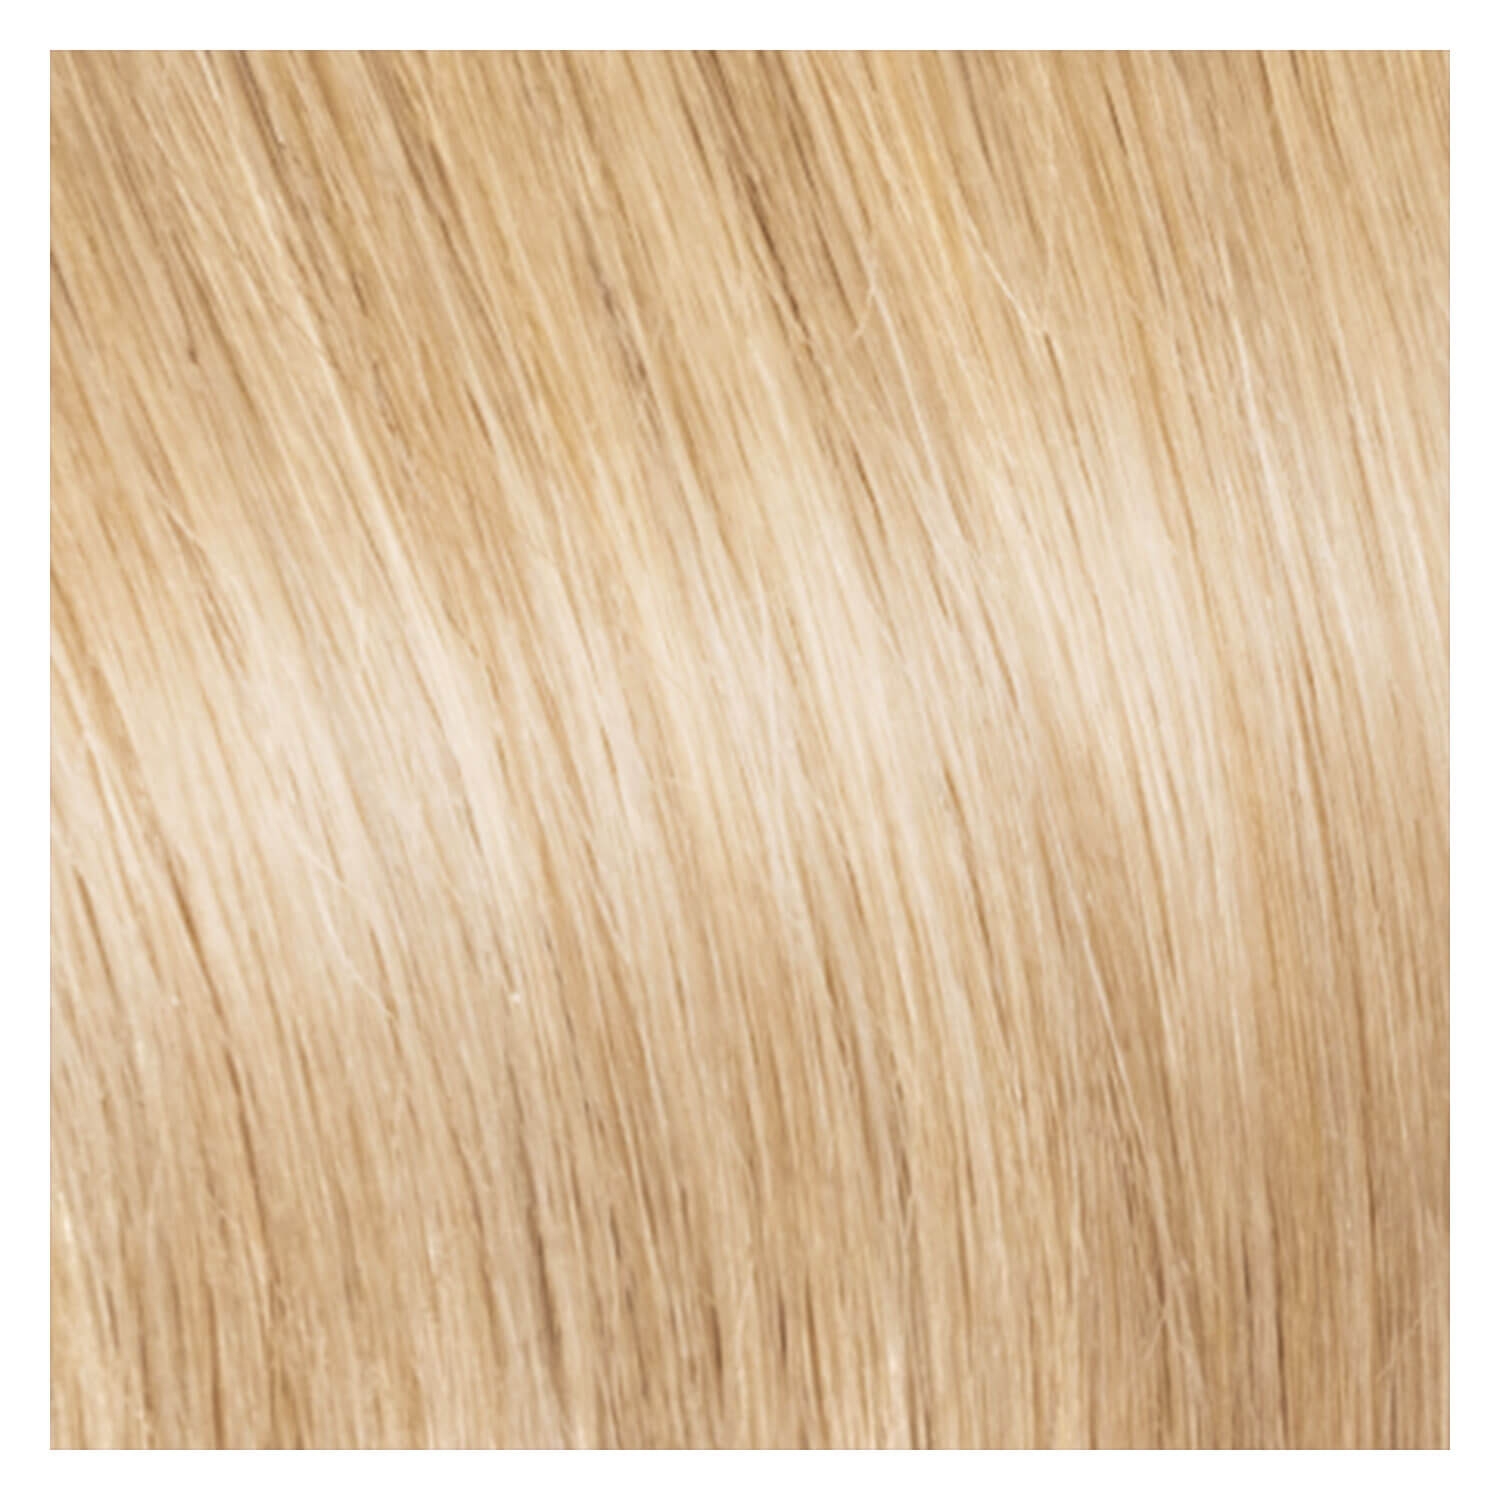 Produktbild von SHE Bonding-System Hair Extensions Wavy - DB2 Hellblond 55/60cm